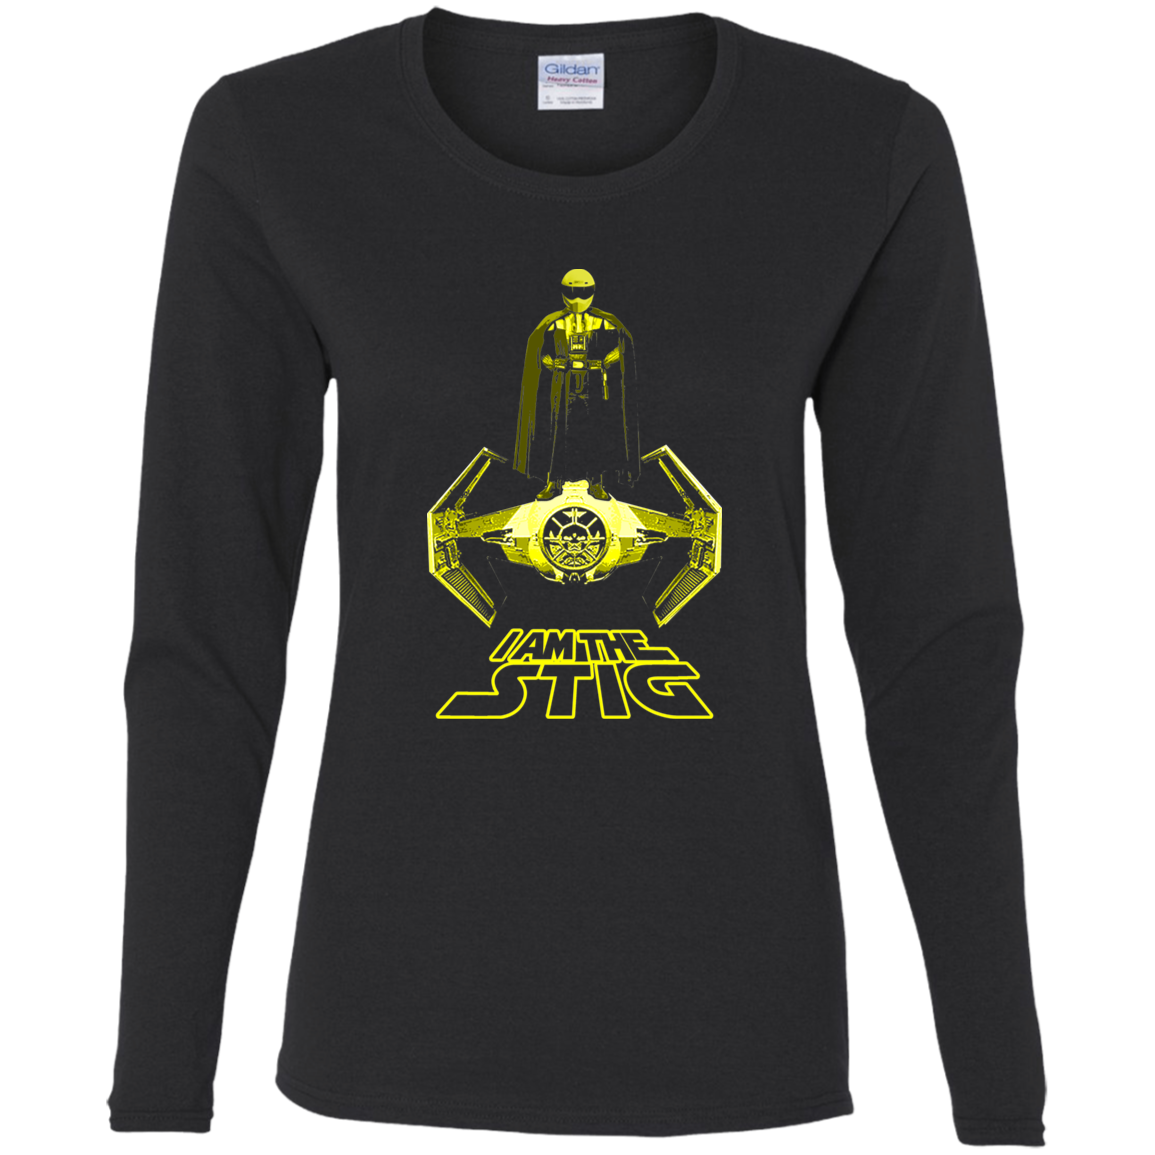 ArtichokeUSA Custom Design. I am the Stig. Vader/ The Stig Fan Art. Ladies' Cotton LS T-Shirt